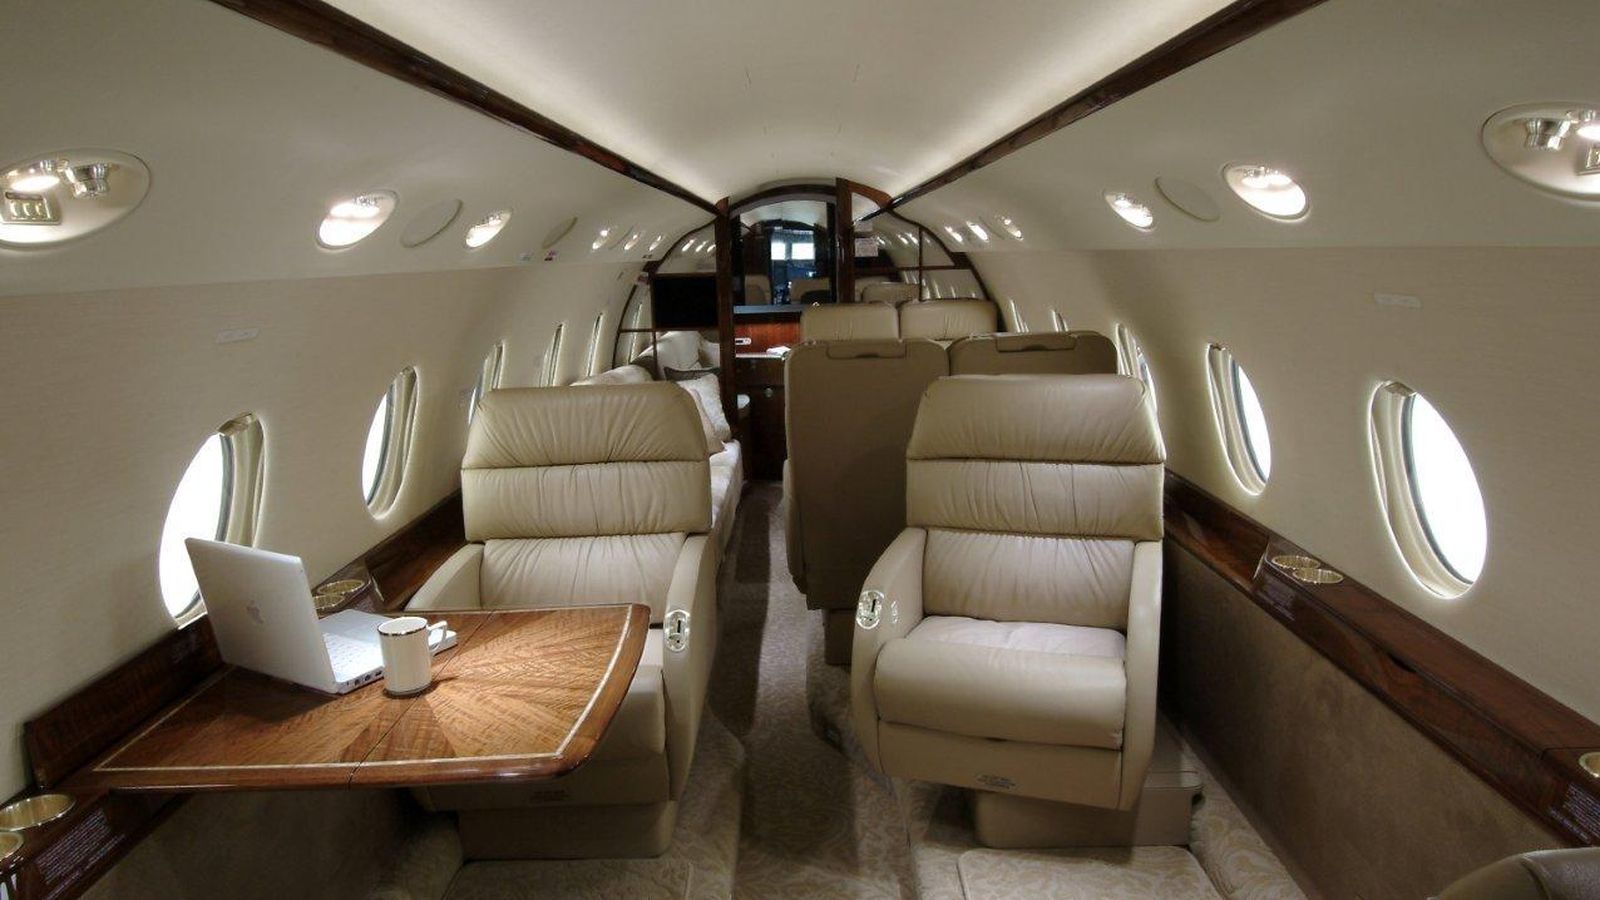 Foto: Interior de un bimotor ejecutivo Gulfstream G200. (vanallen.com)